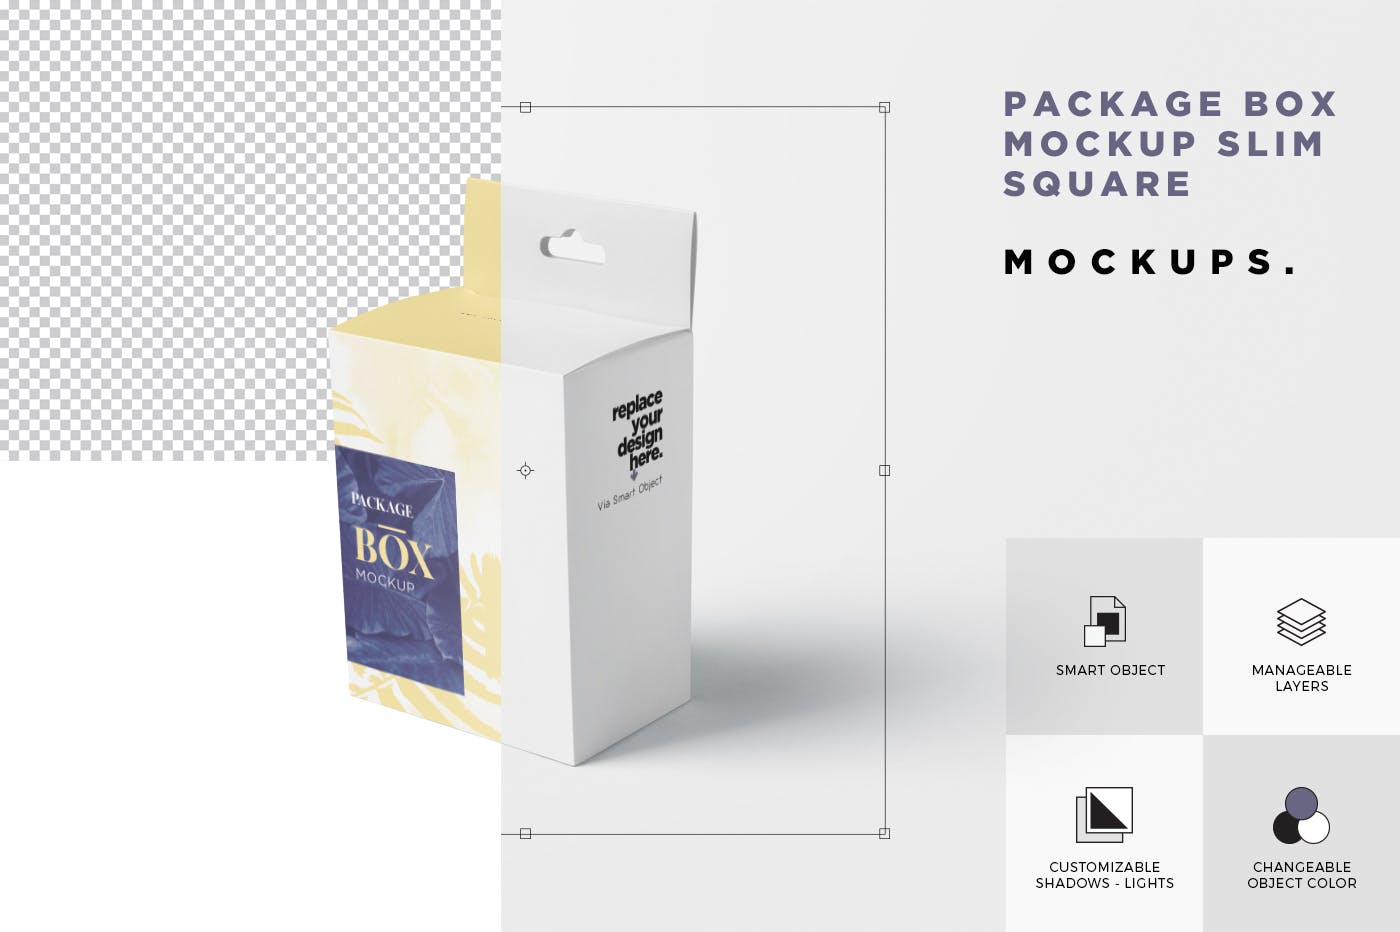 挂耳式扁平矩形包装盒16图库精选模板 Package Box Mockup Set – Slim Square with Hanger插图(6)